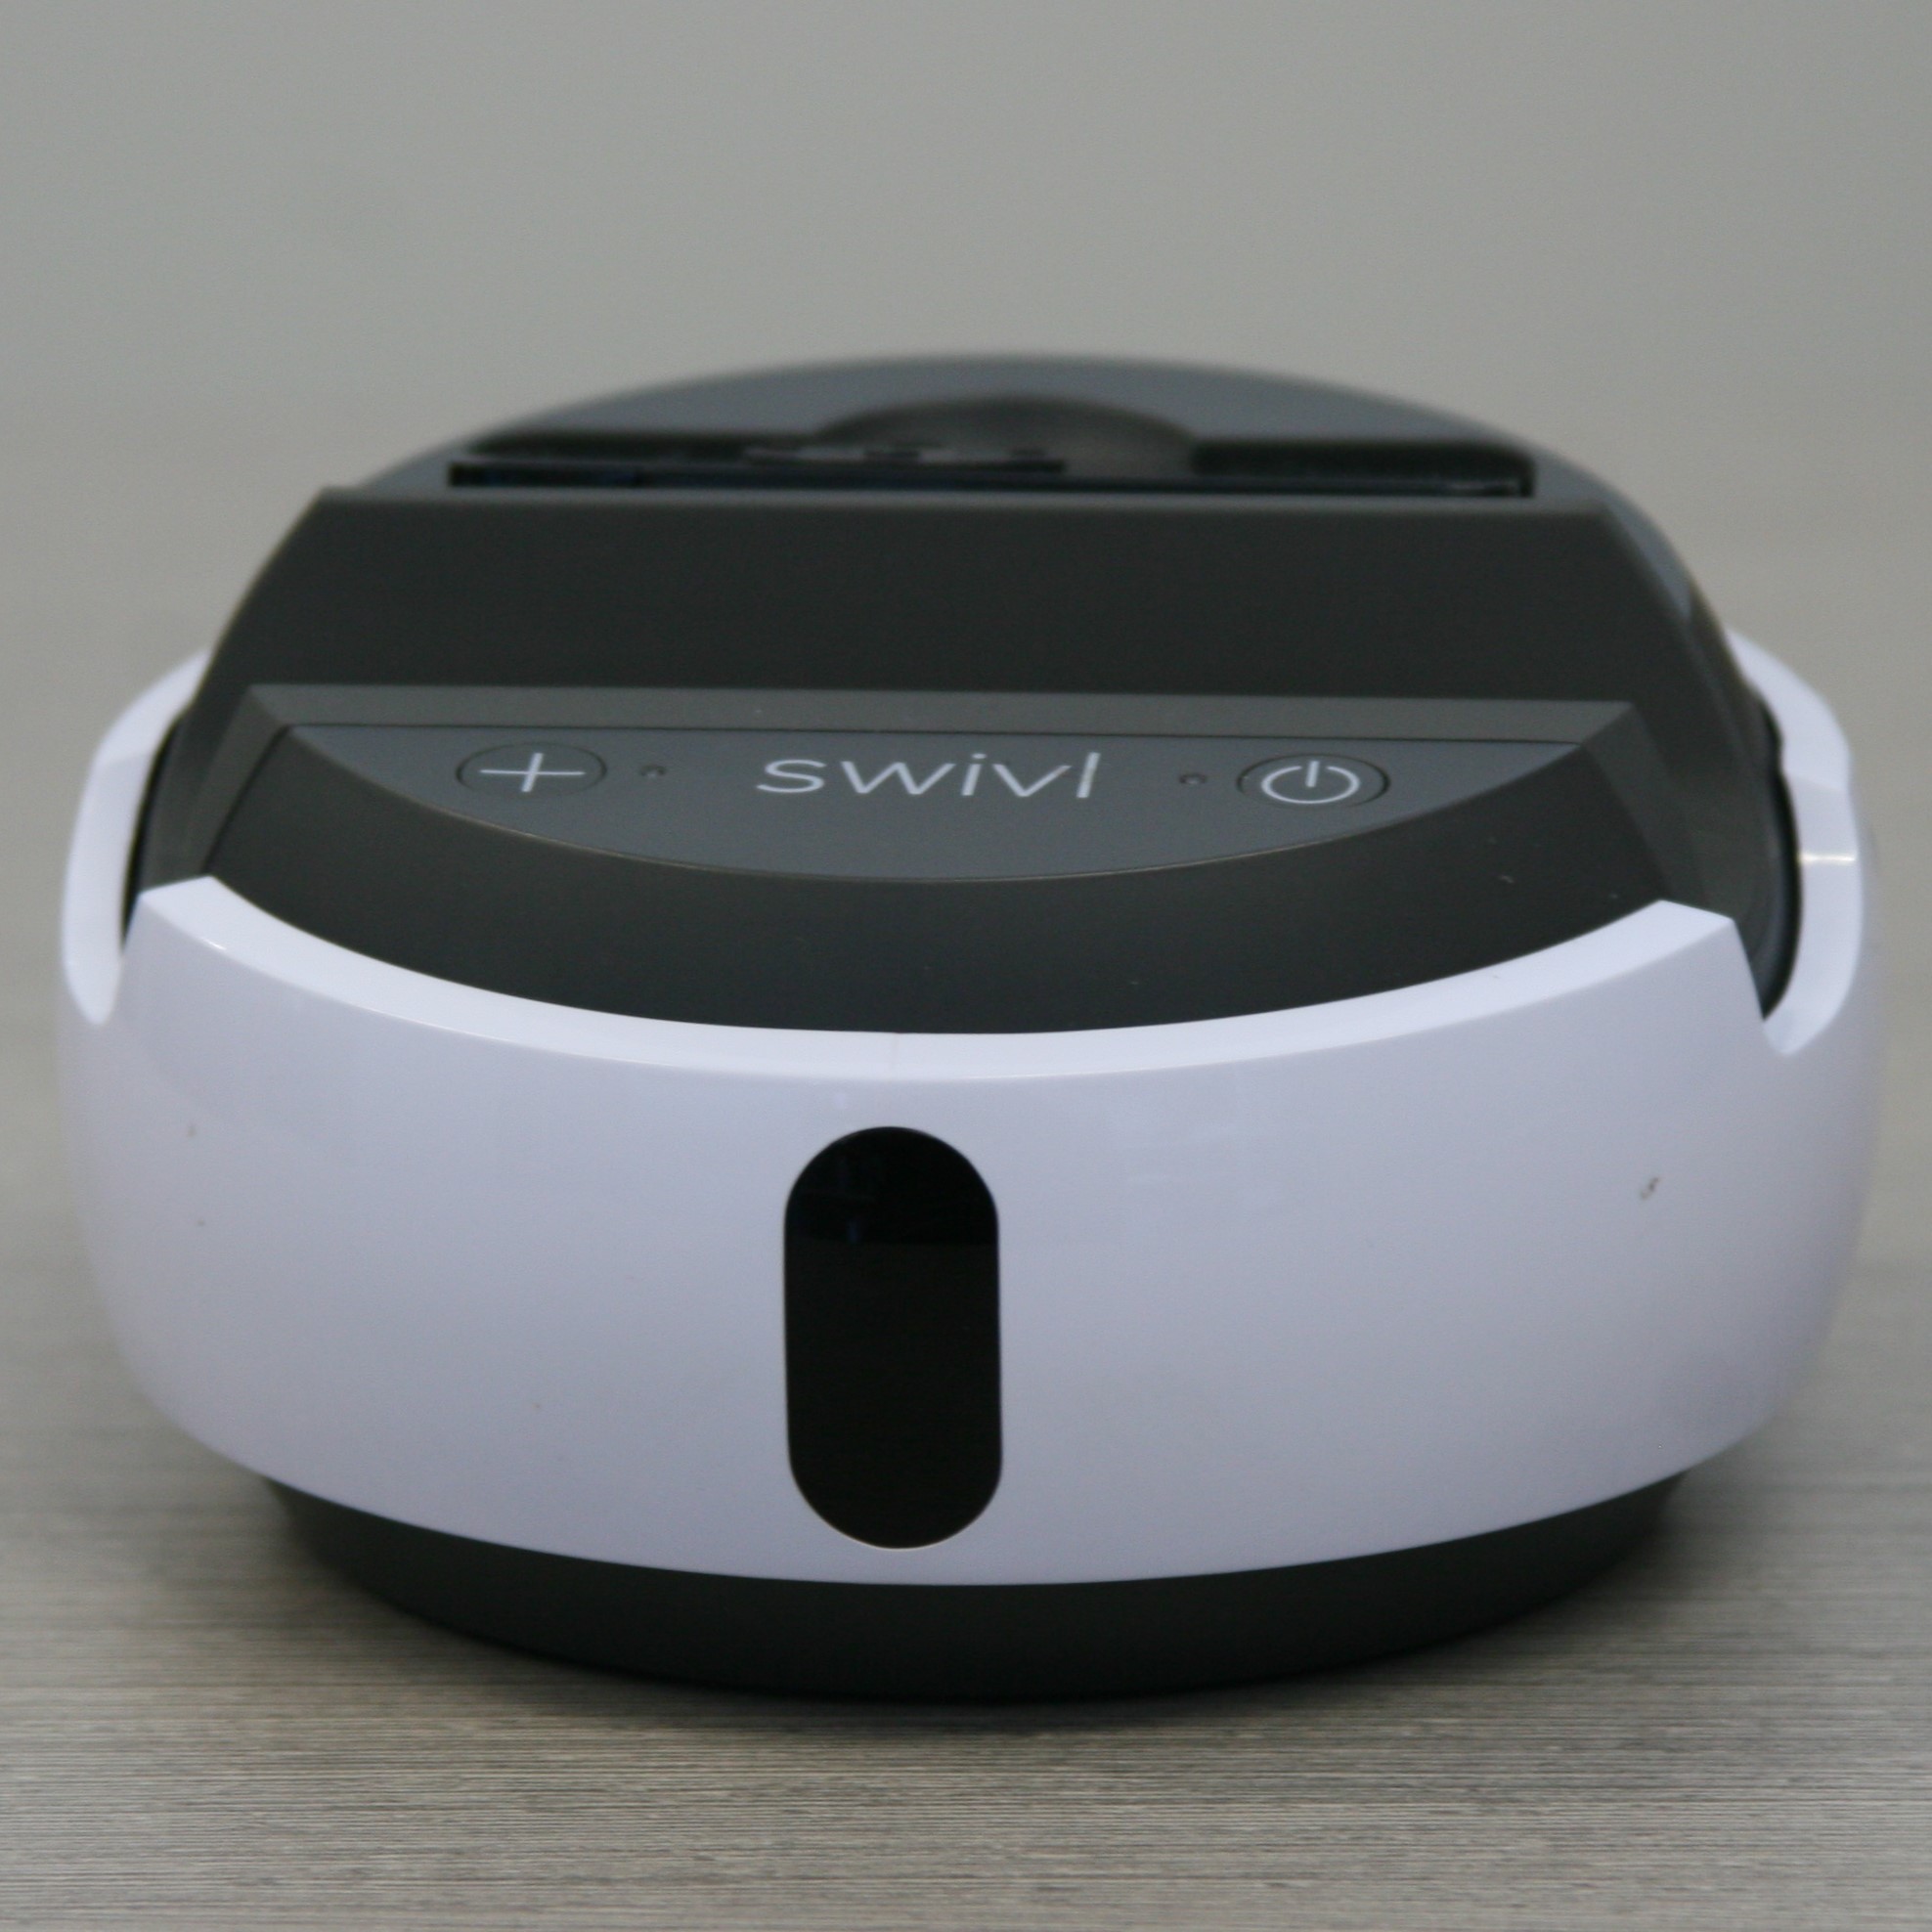 SWIVL Video Robot